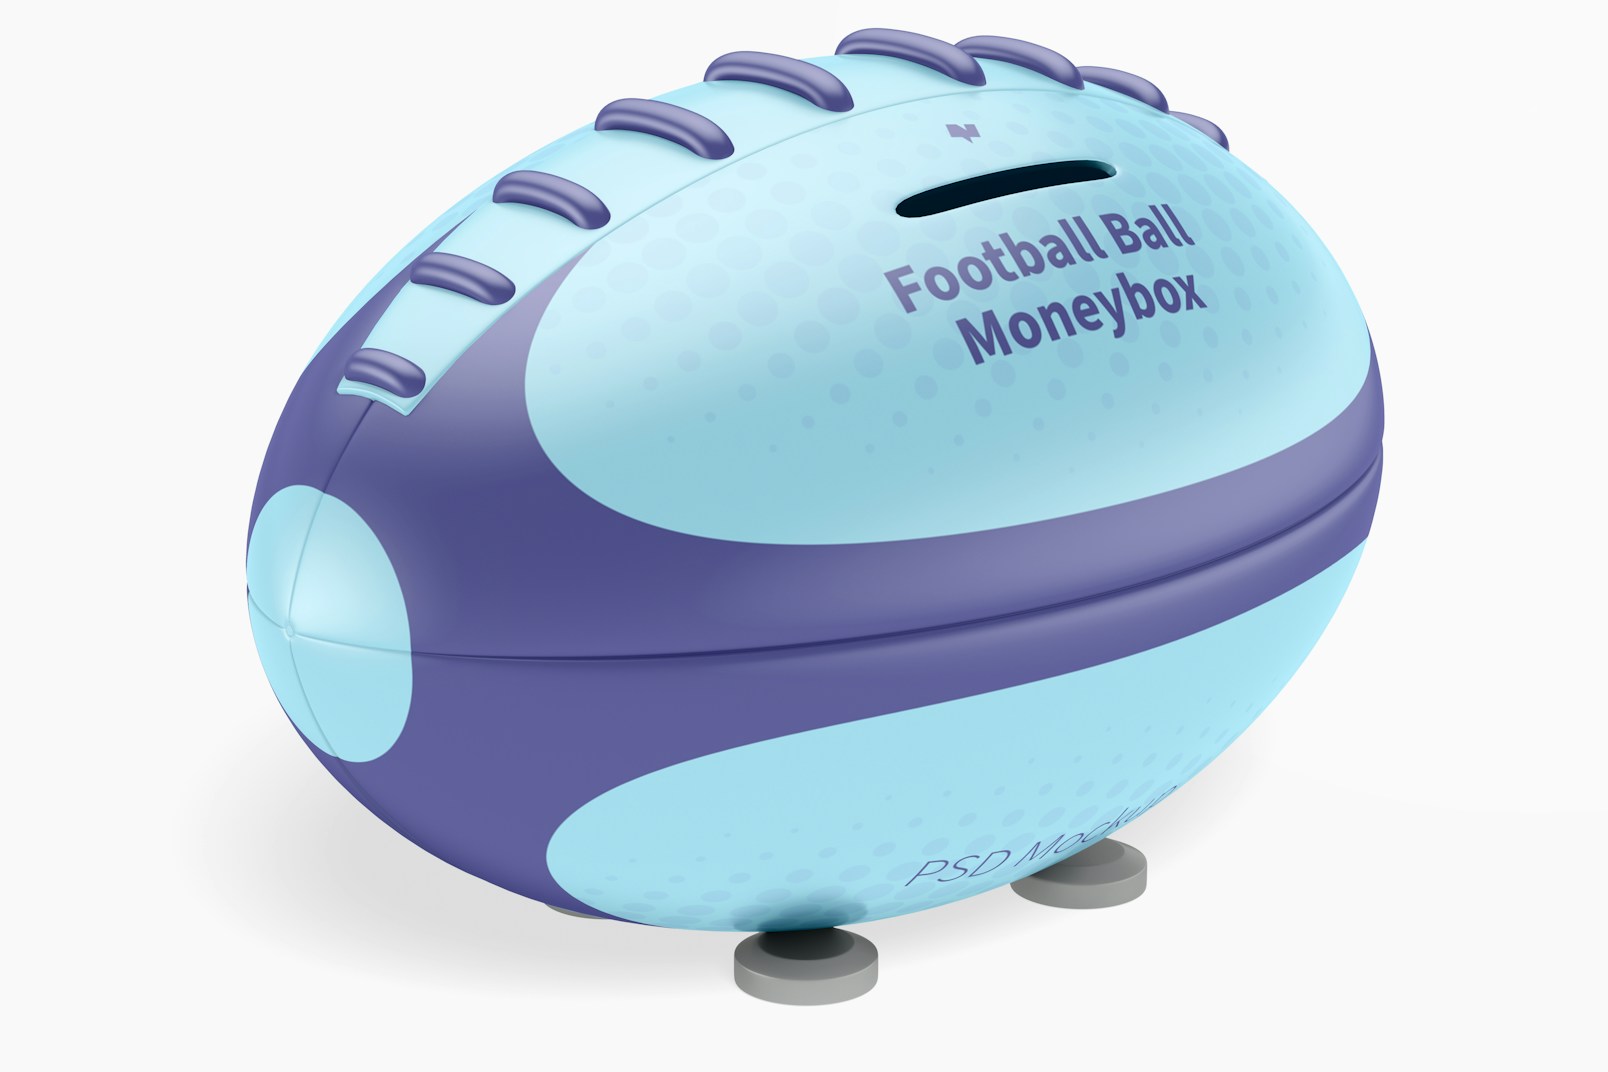 Metal Football Ball Moneybox Mockup, Perspective